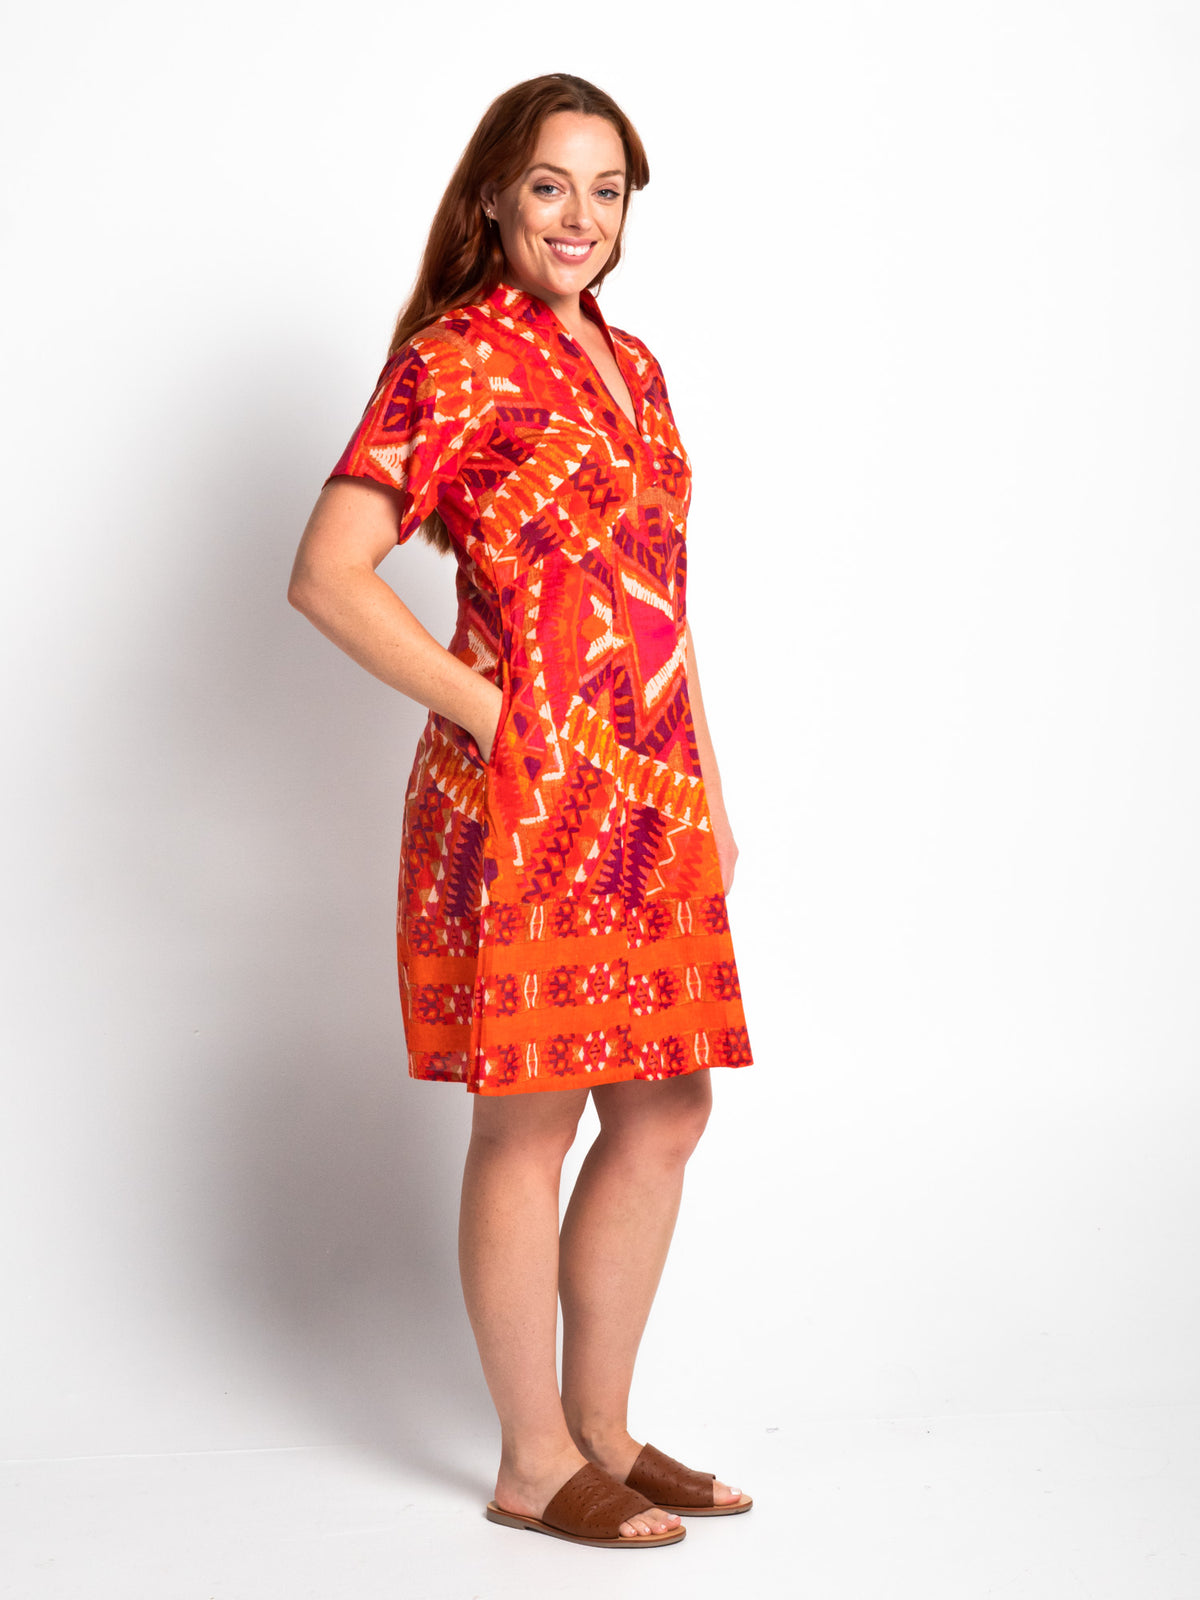 Mareeba Dress in Blood Orange